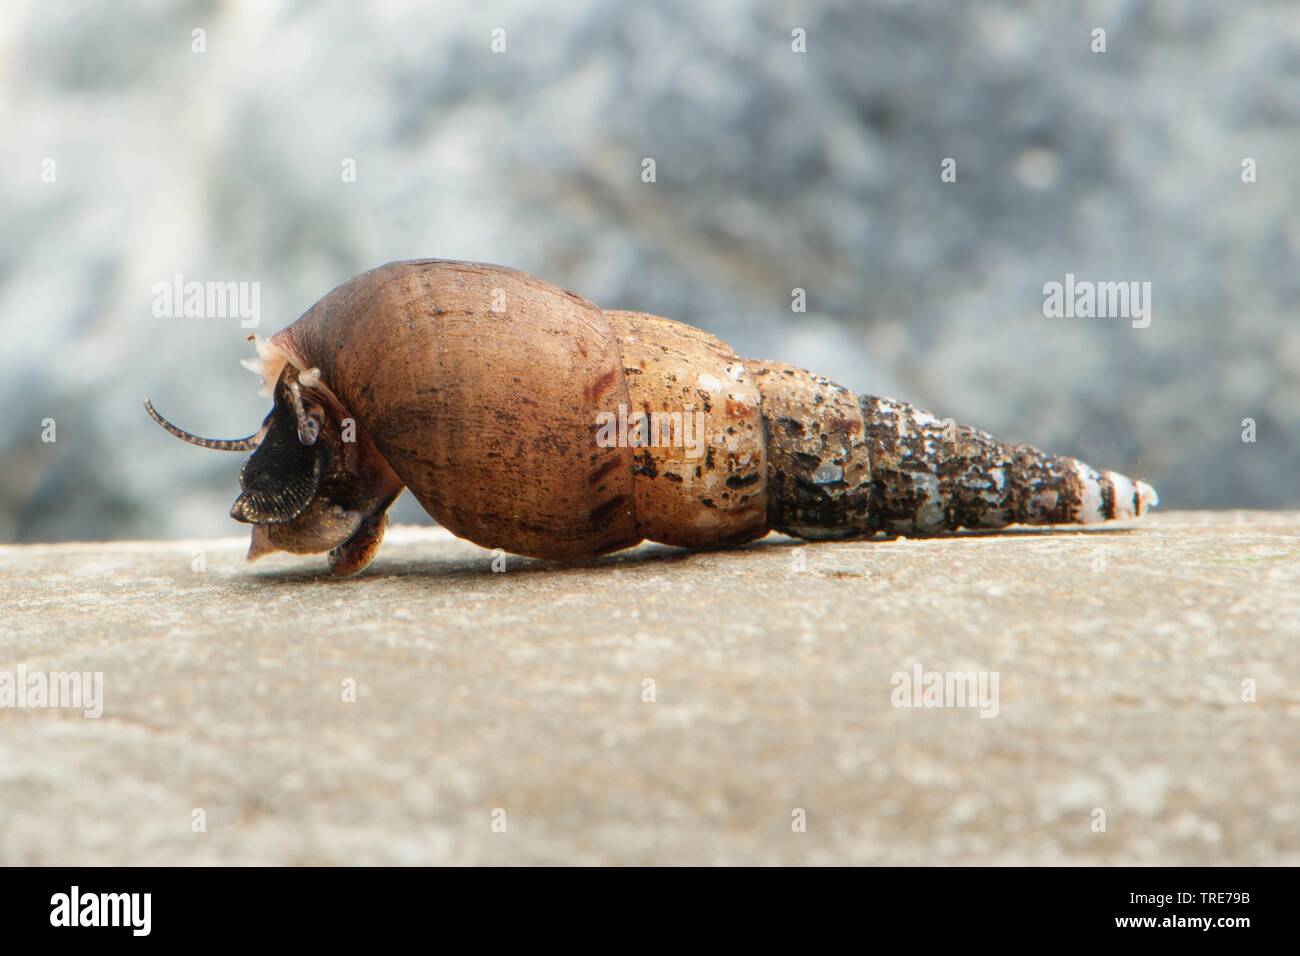 Malaysian trumpet snail (Melanoides tuberculata), under water on a stone Stock Photo